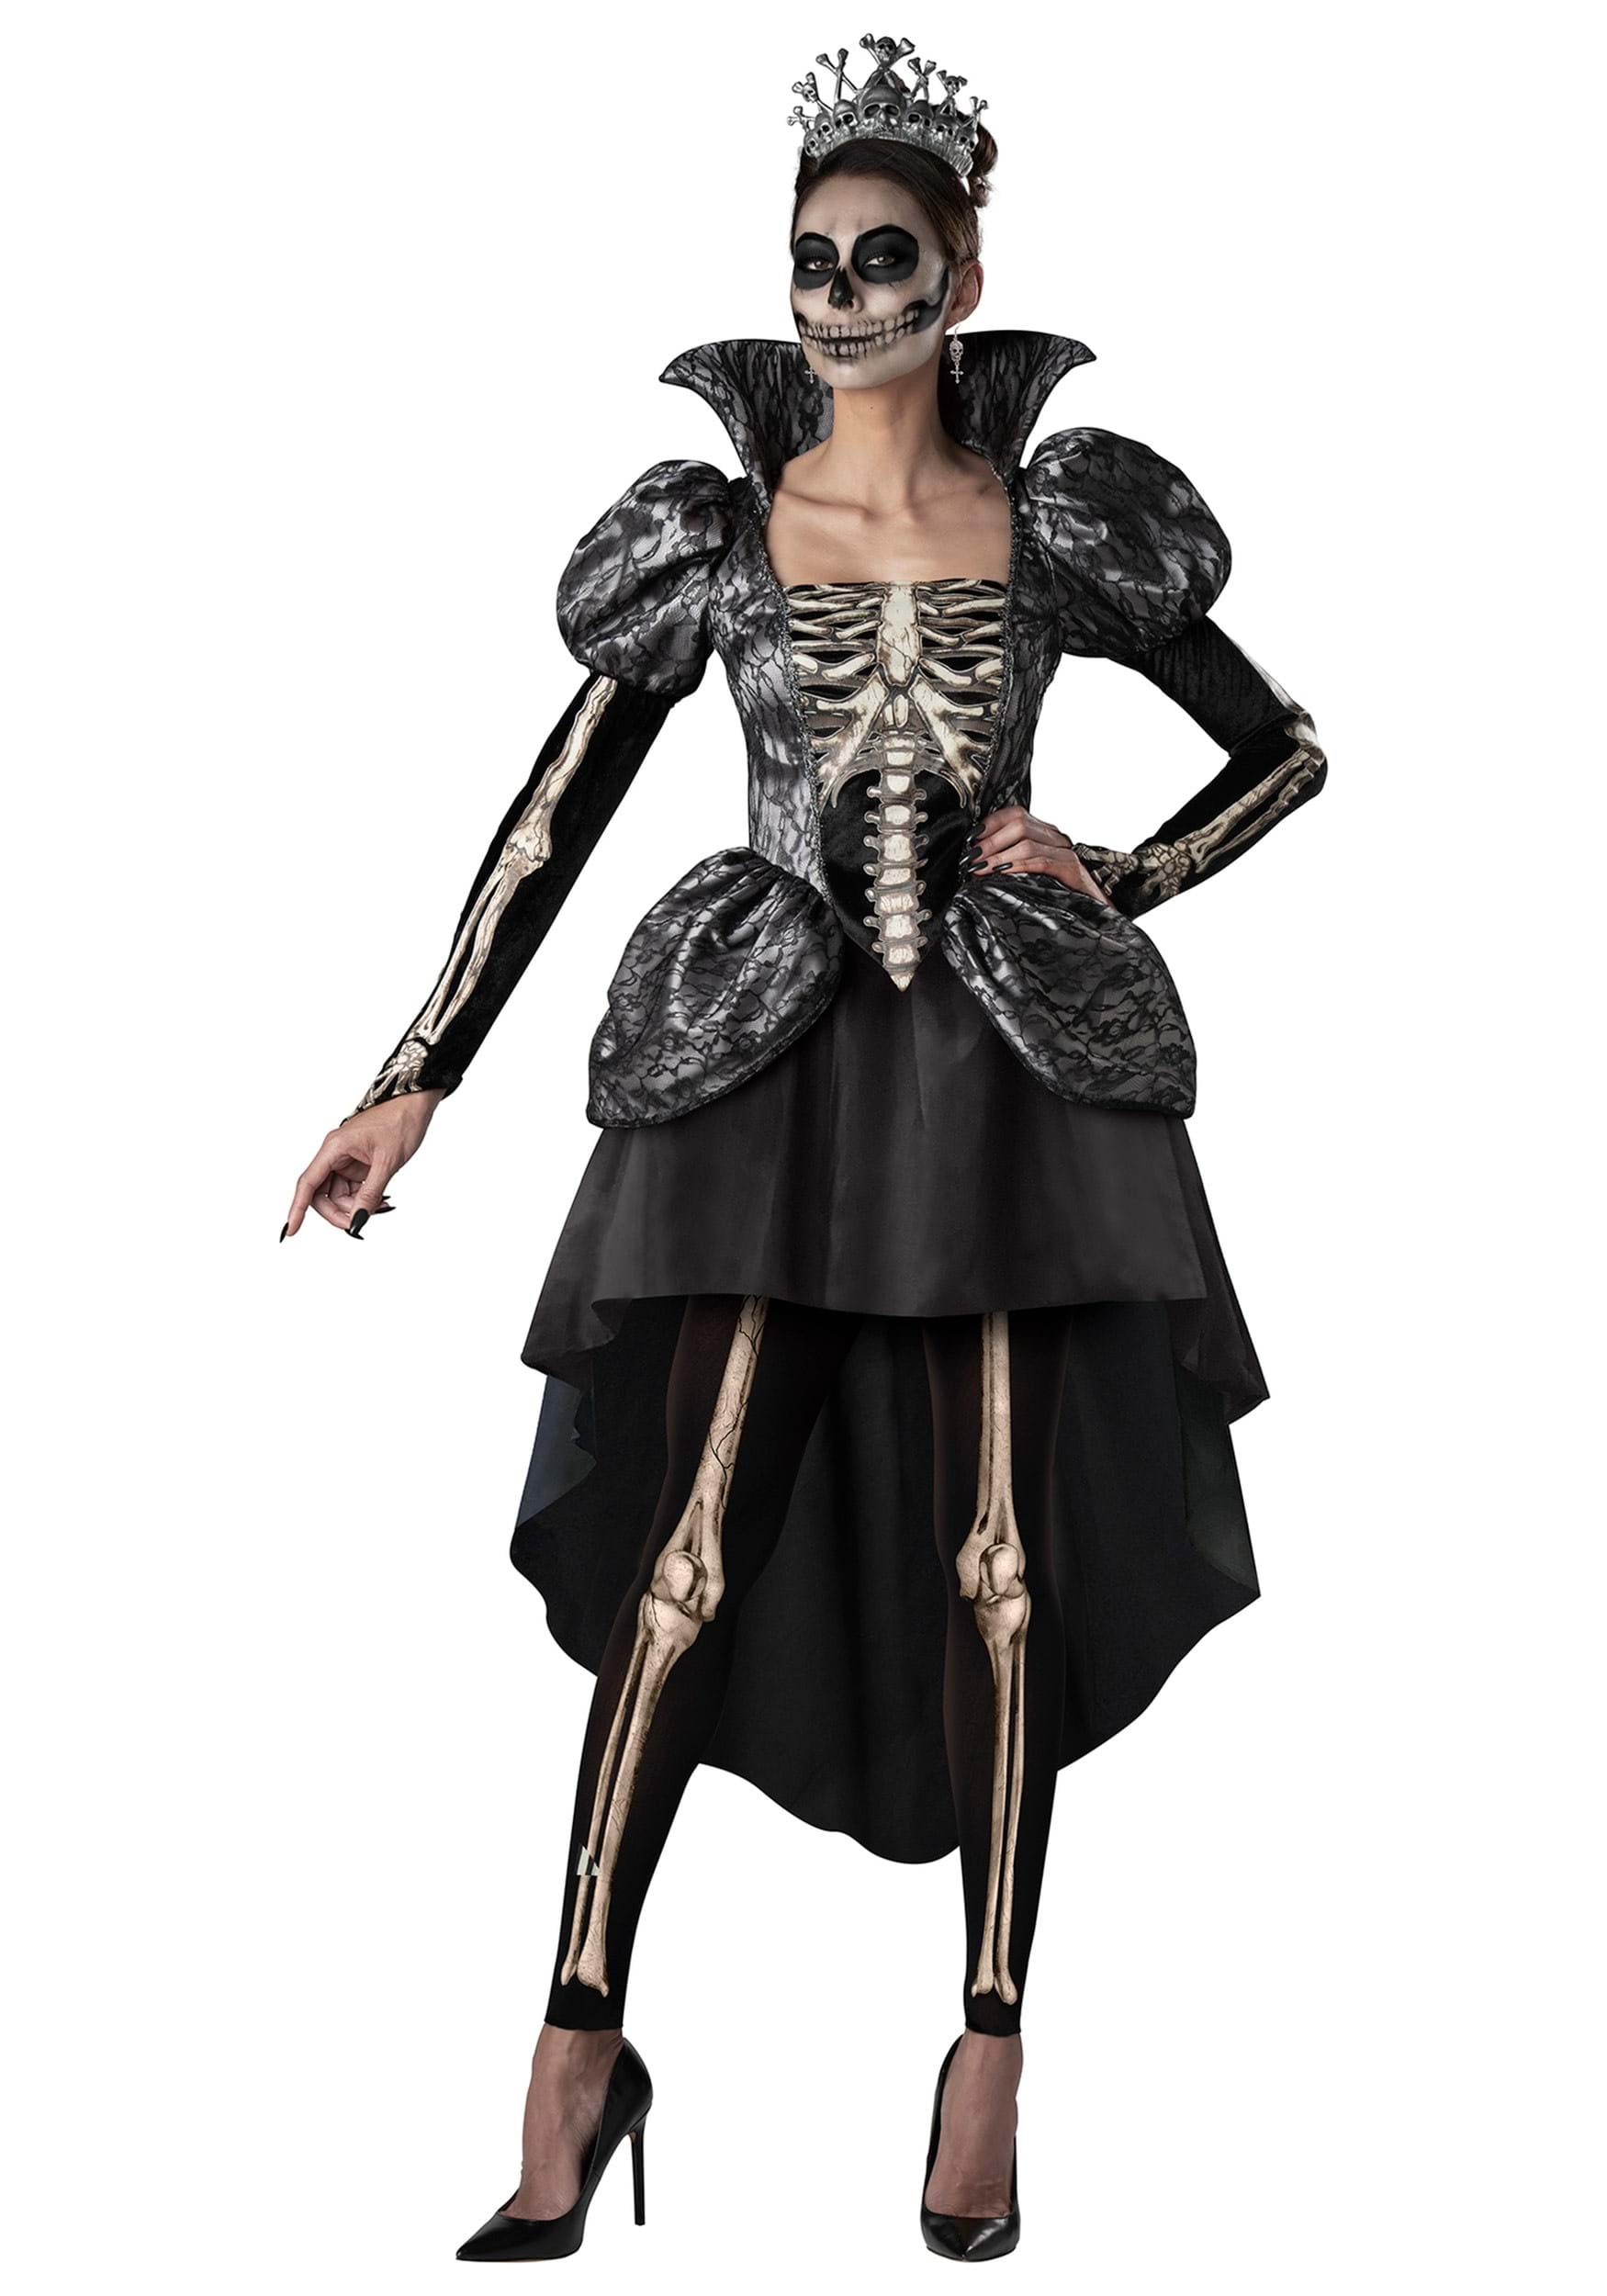 Photos - Fancy Dress Fun World Skeleton Queen Costume for Women Black/Brown INCF11138